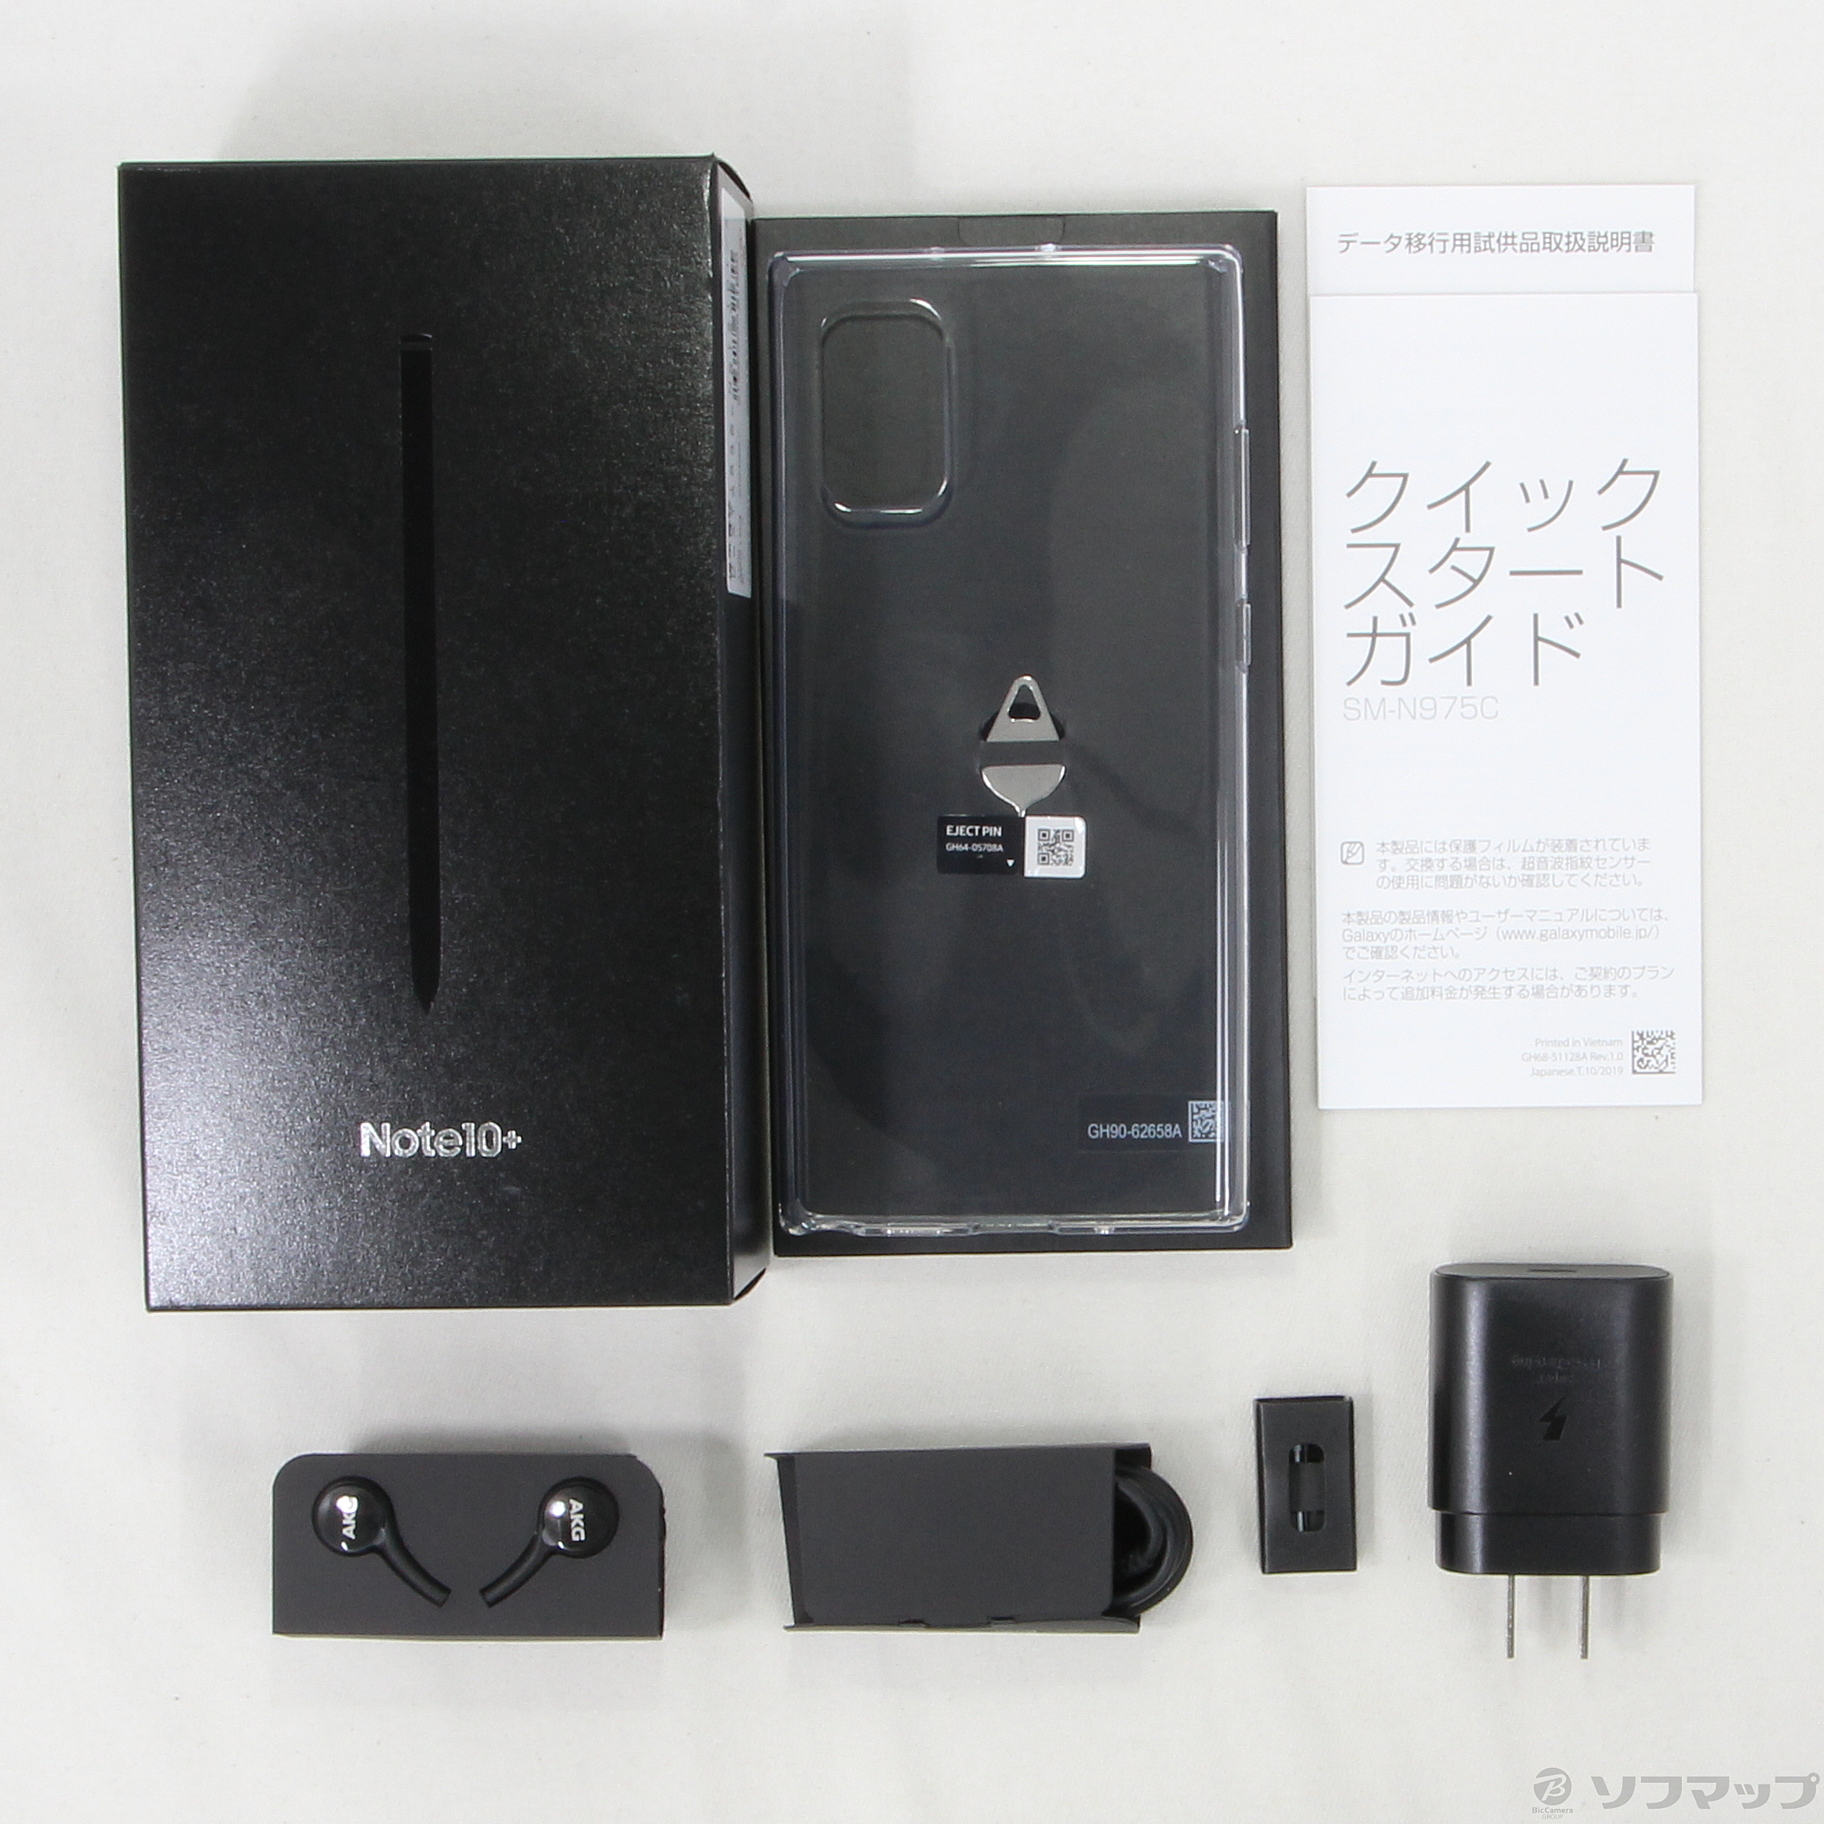 Galaxy Note 10+ オーラブラック 256GB SM-N975C